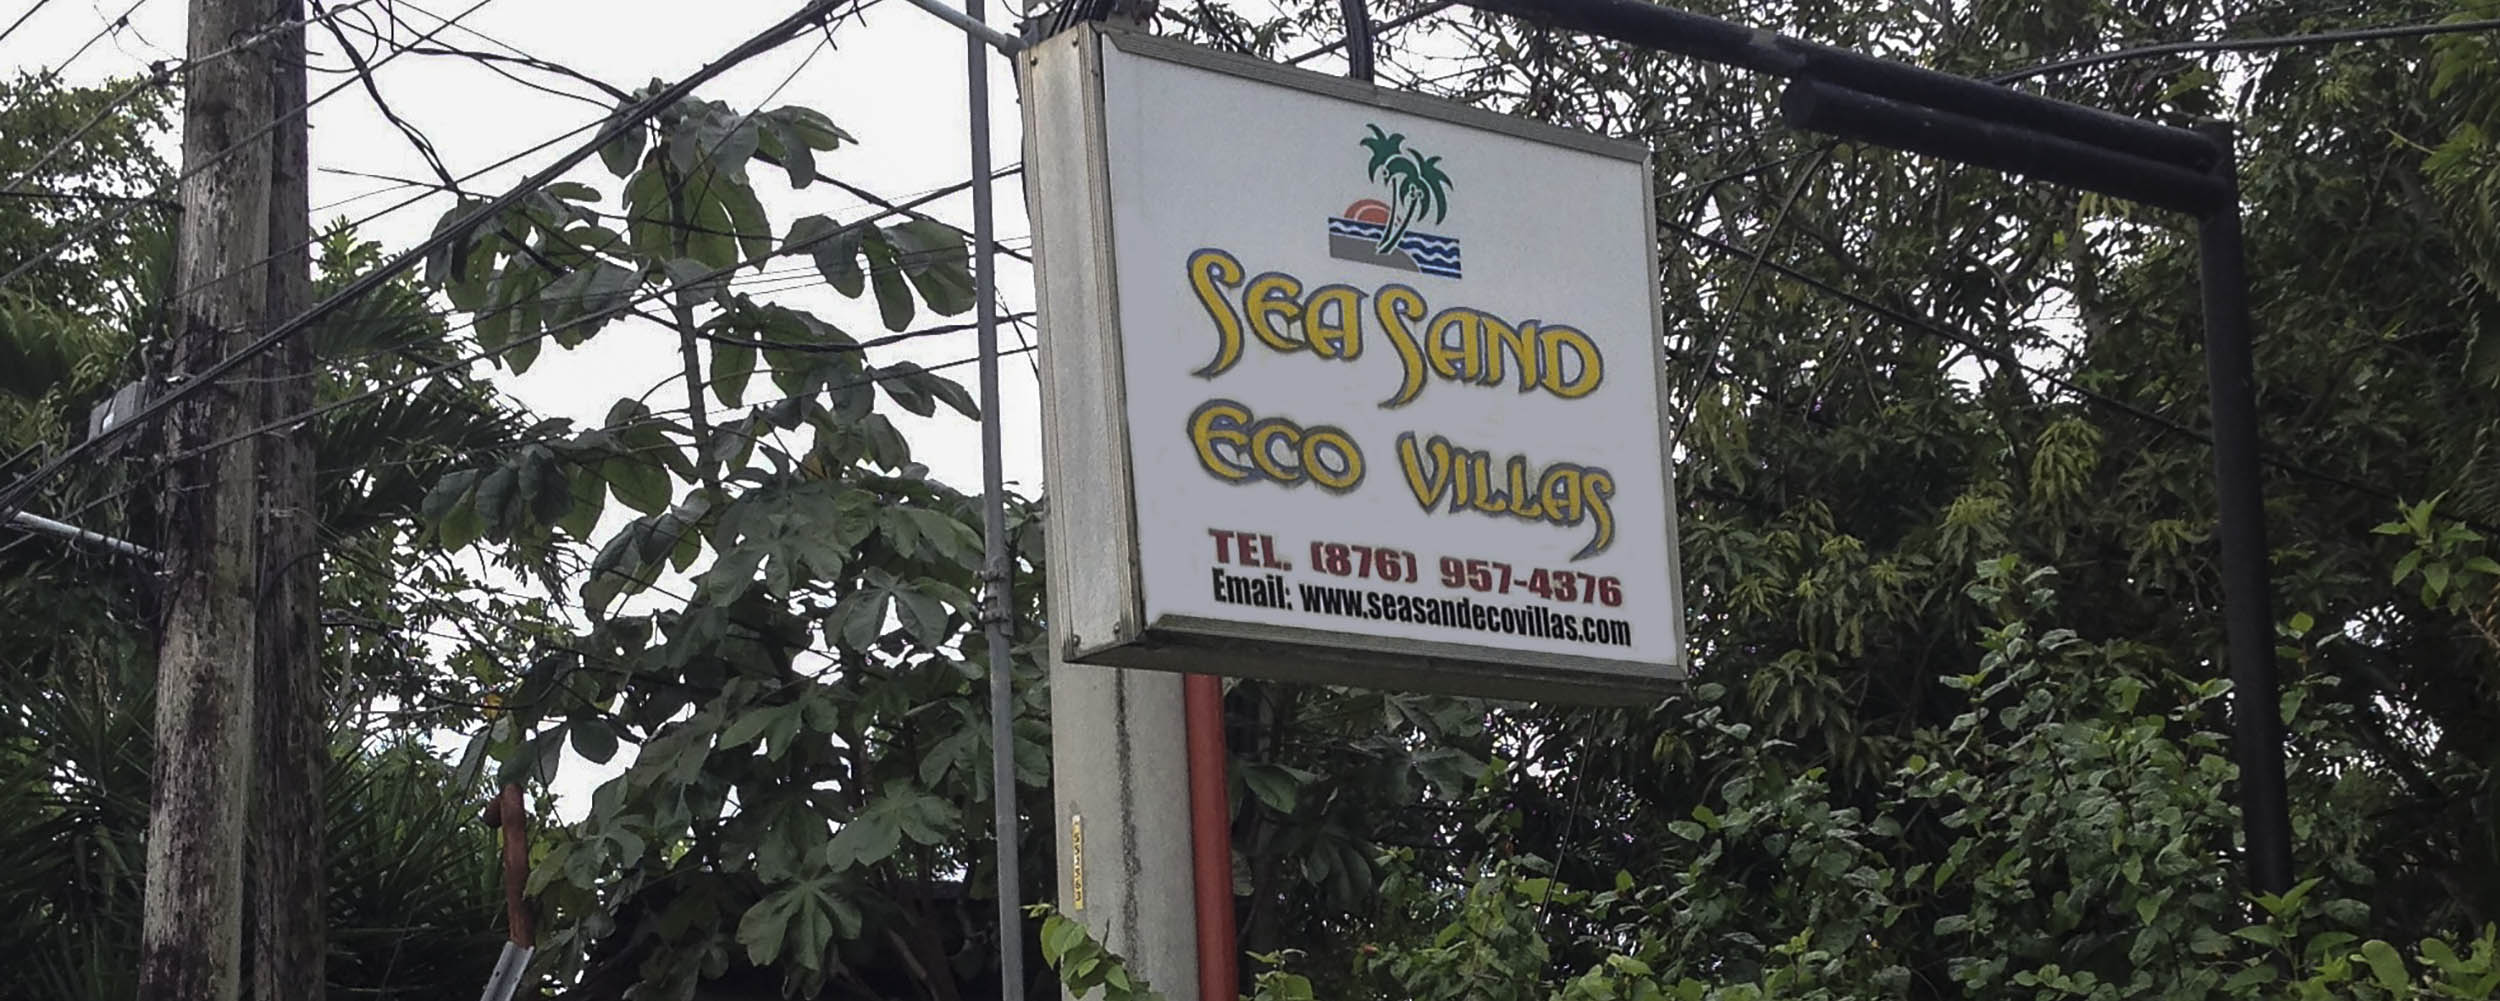 Sea Sand Eco Villas - Negril Jamaica